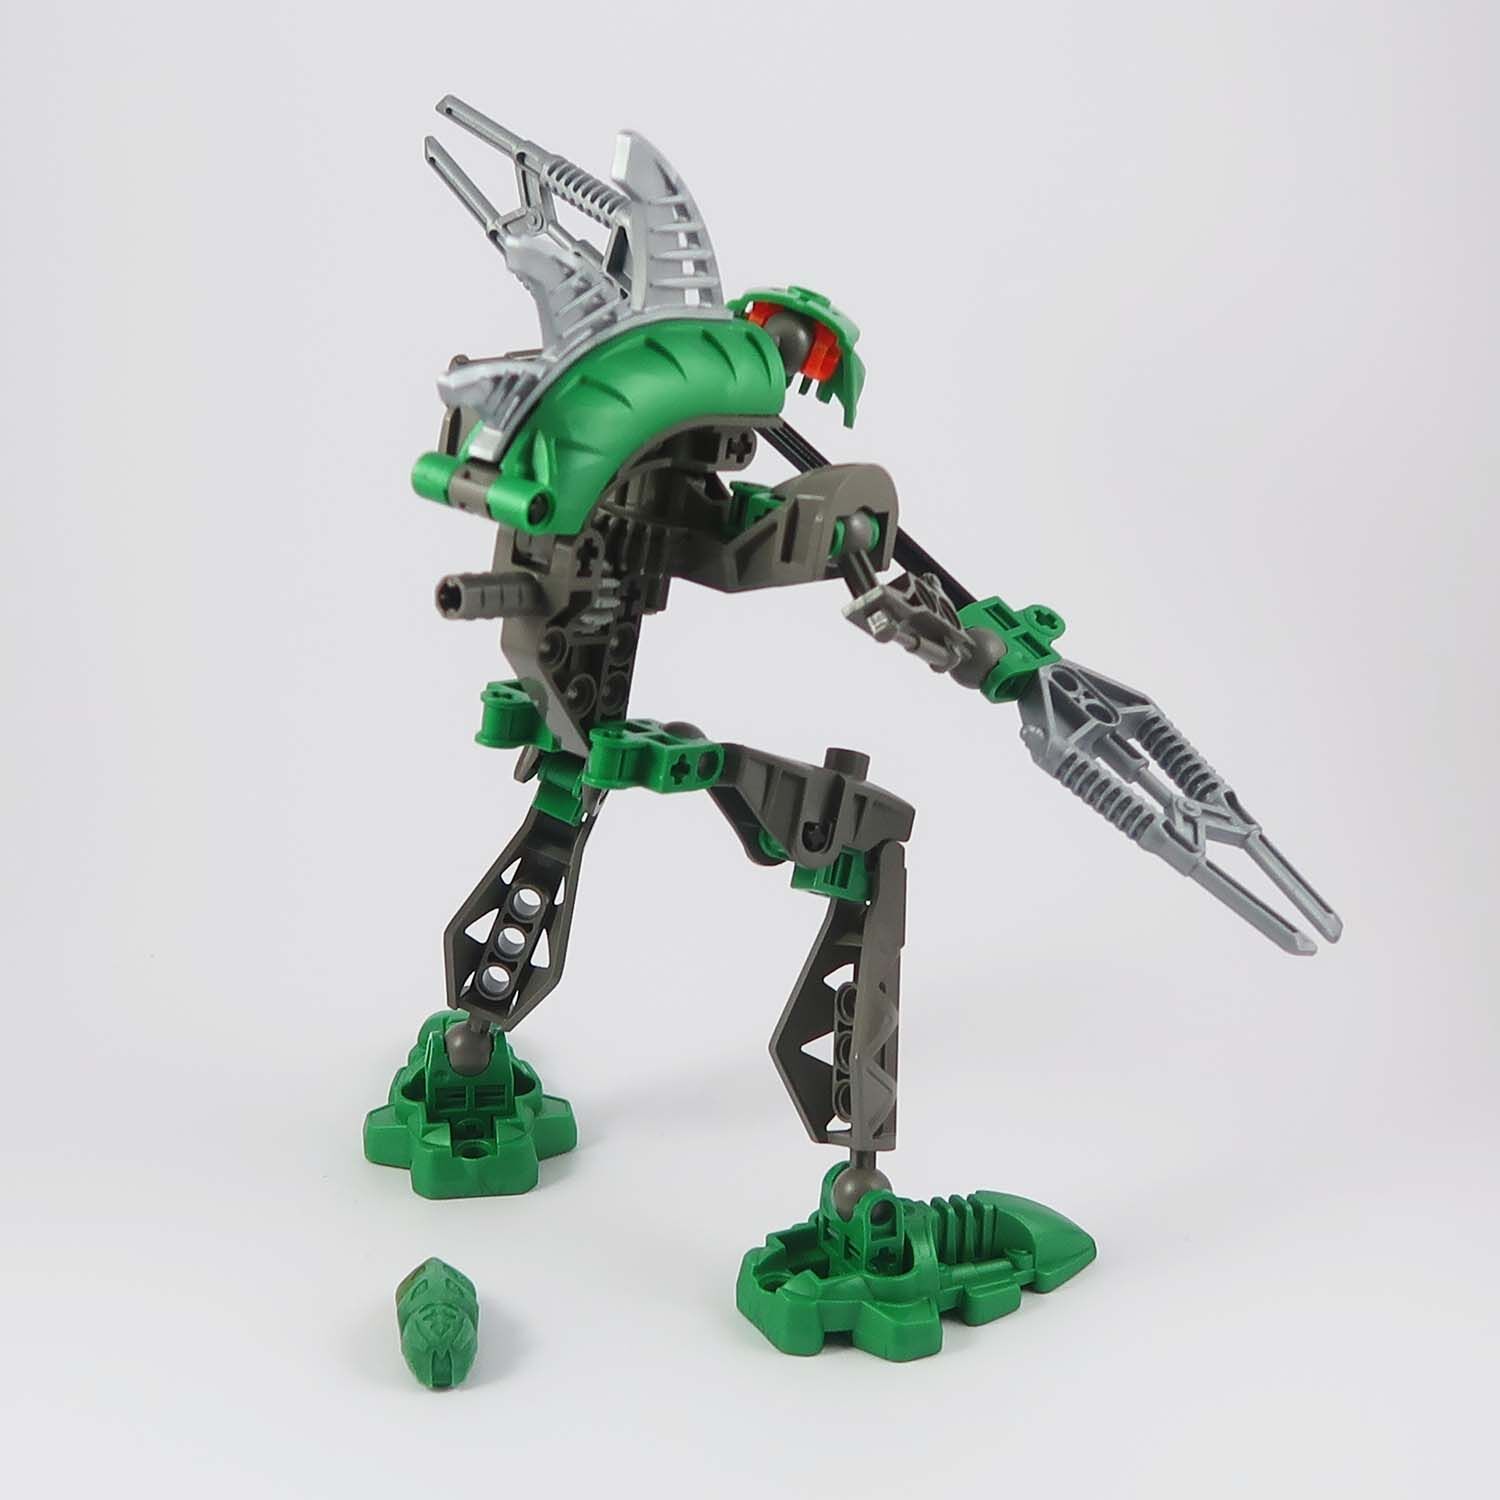 LEGO Bionicle - Rahkshi Lehrak (8589)